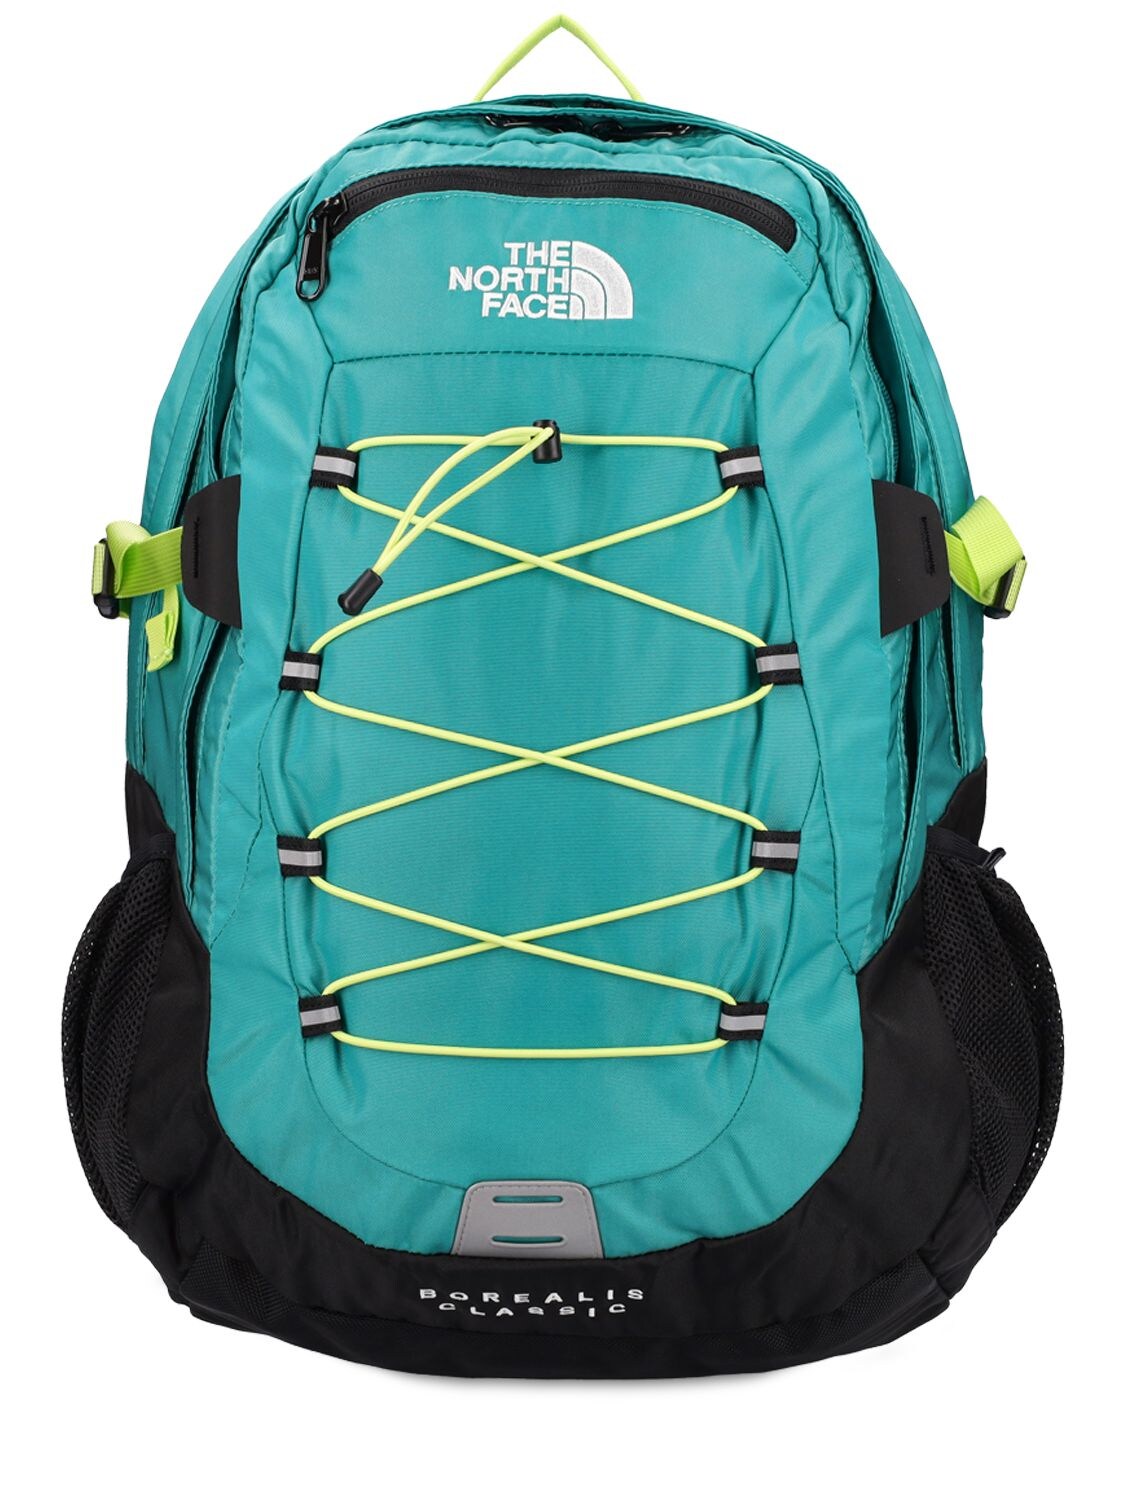 THE NORTH FACE 29l Borealis Classic Nylon Backpack